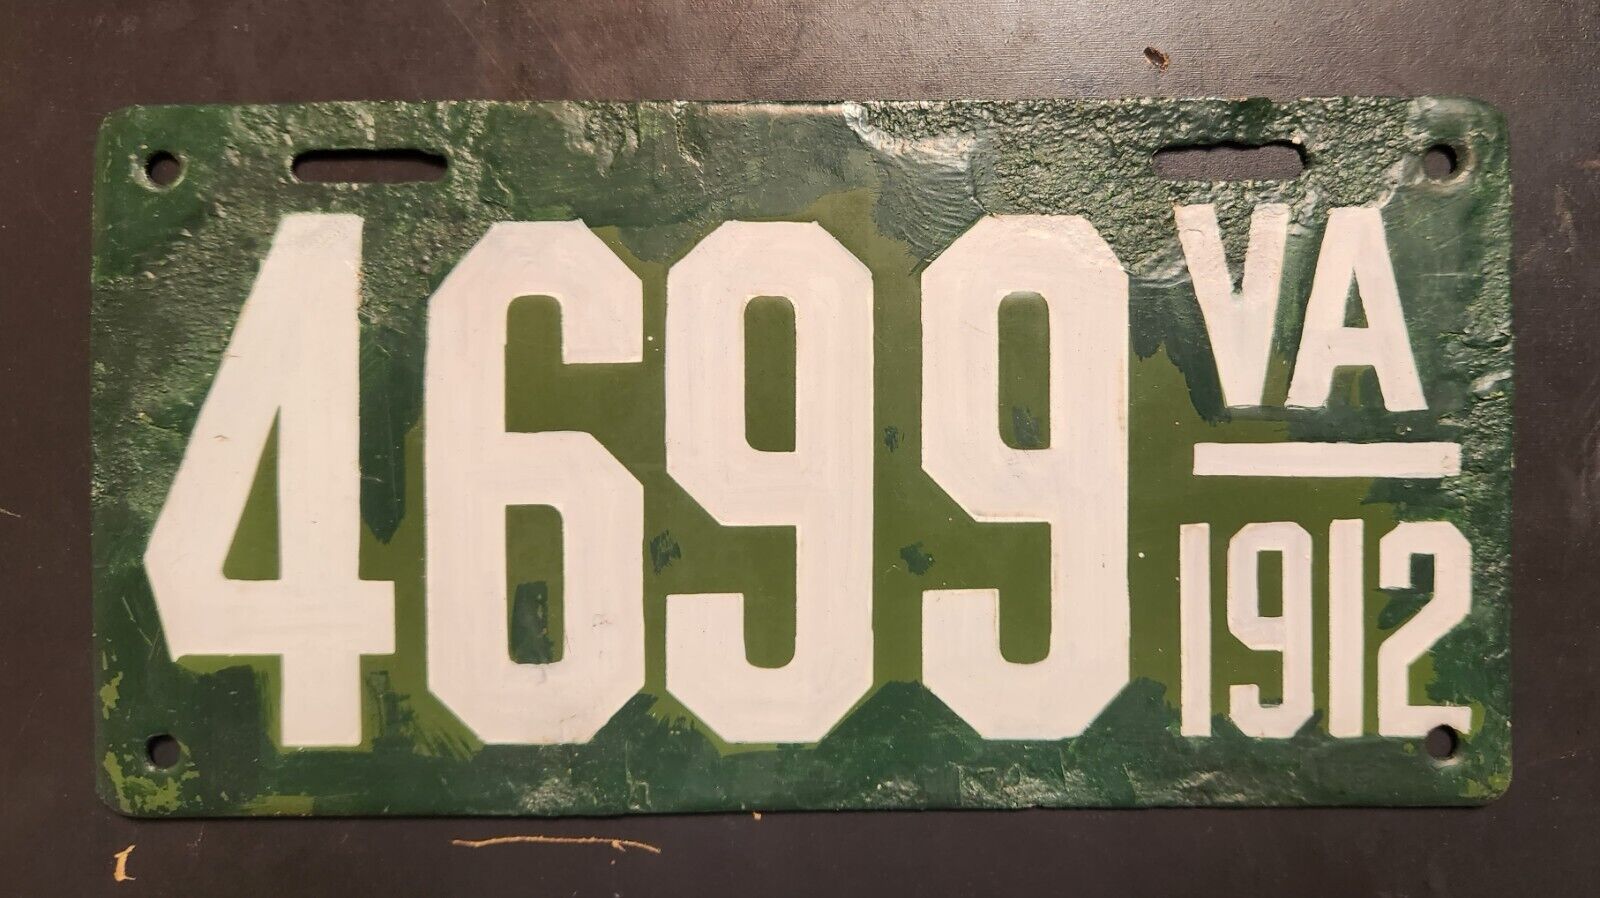 1912 Virginia VA Porcelain License Plate Auto Car Tag Vehicle Registration